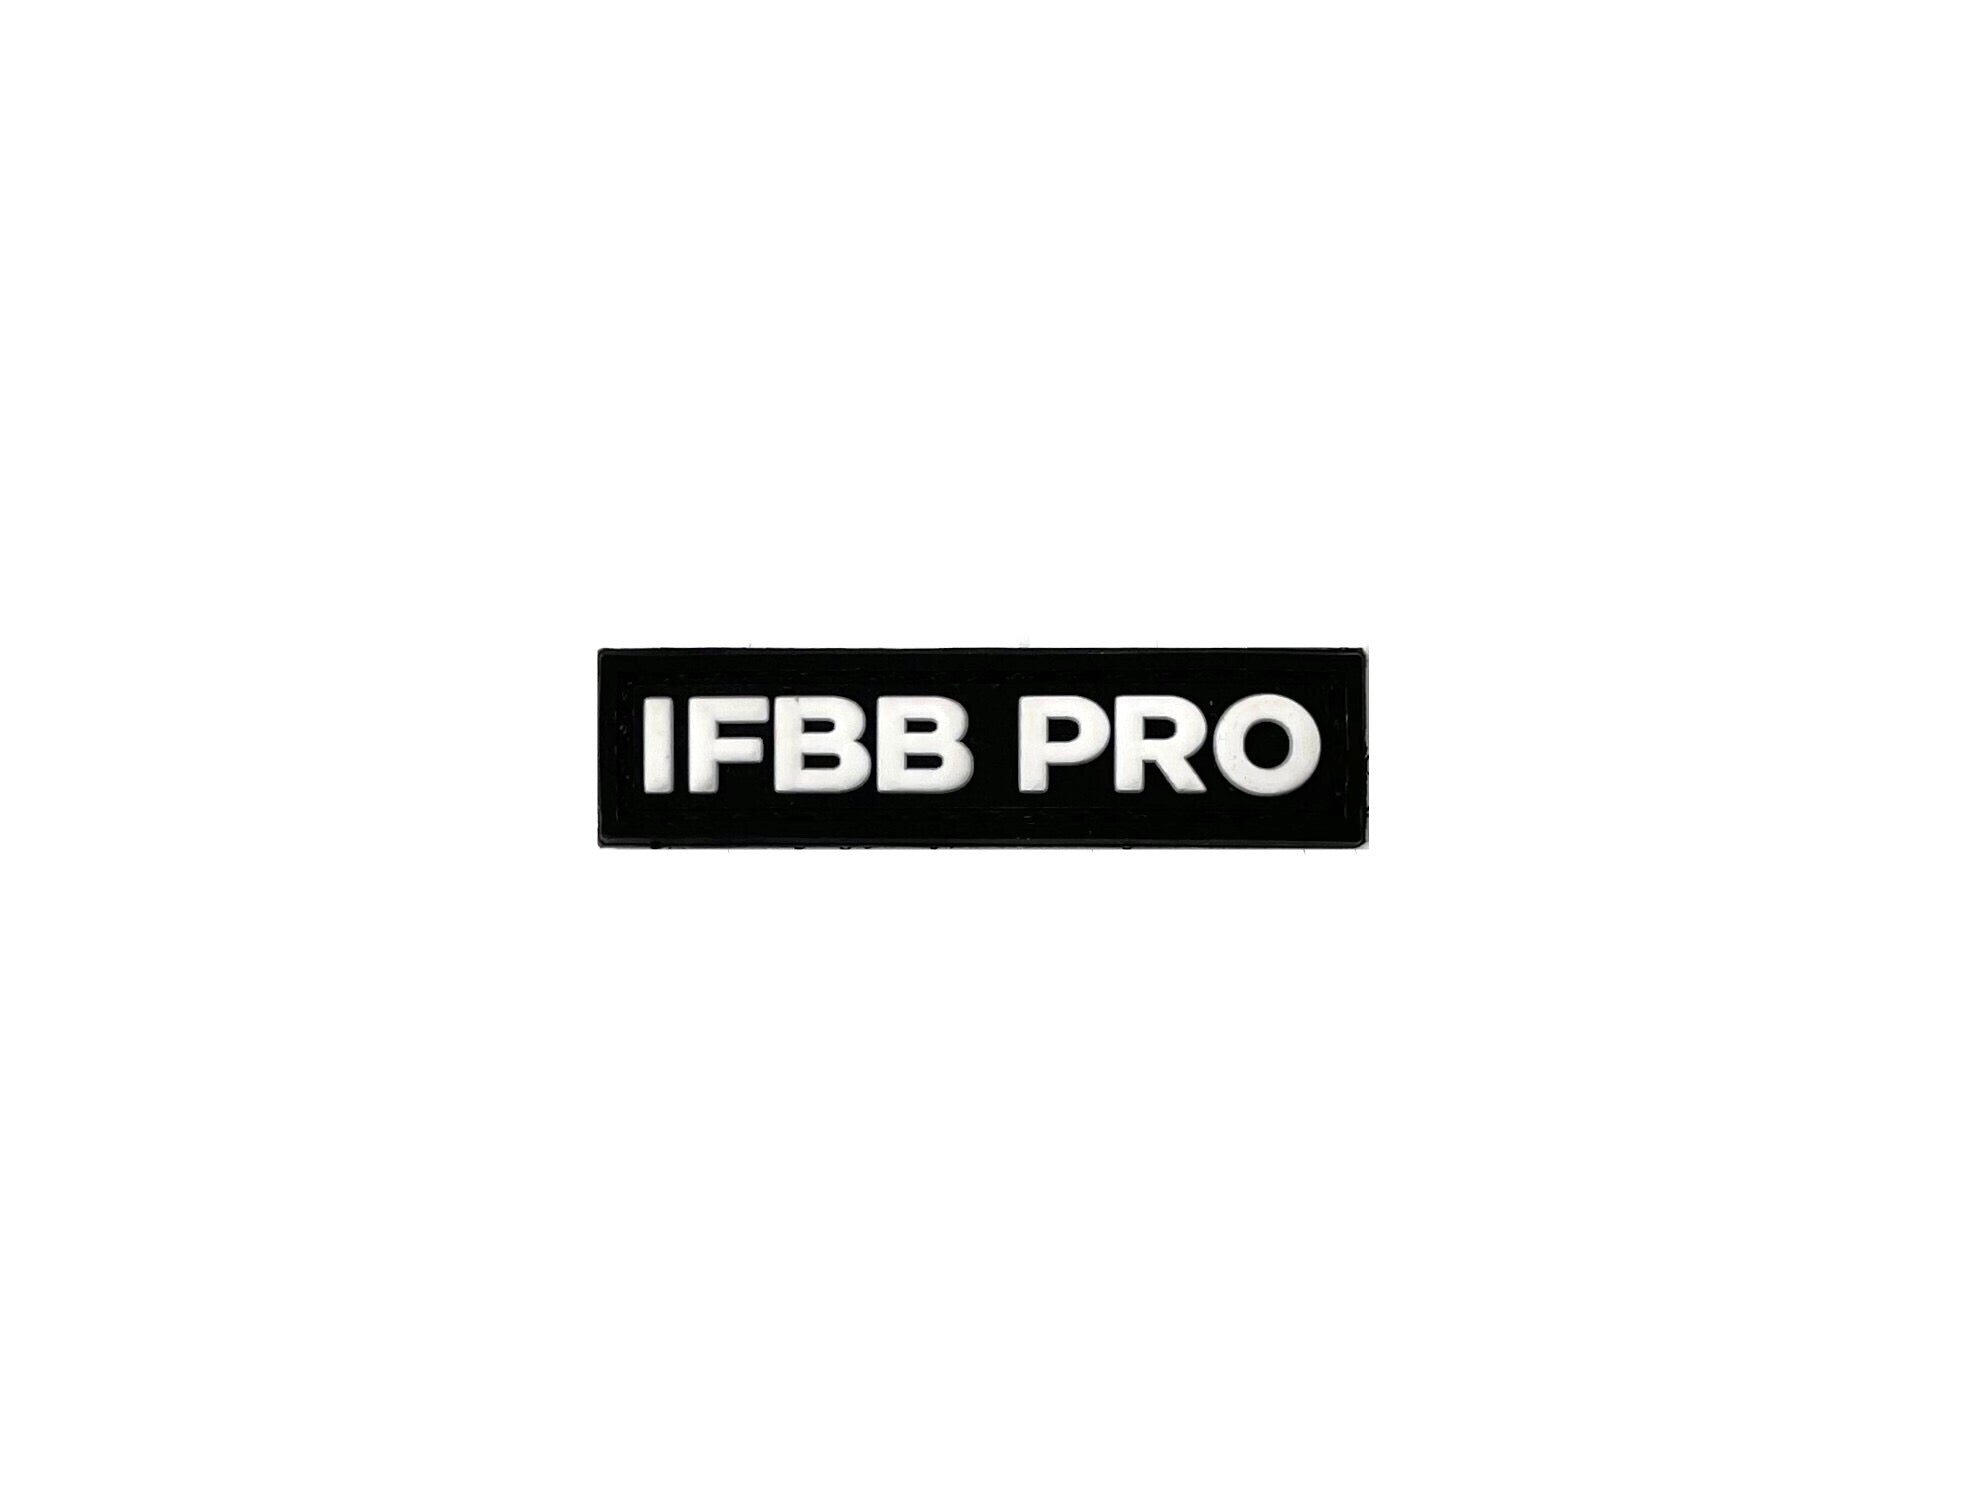 IFBB PRO Mini Patch